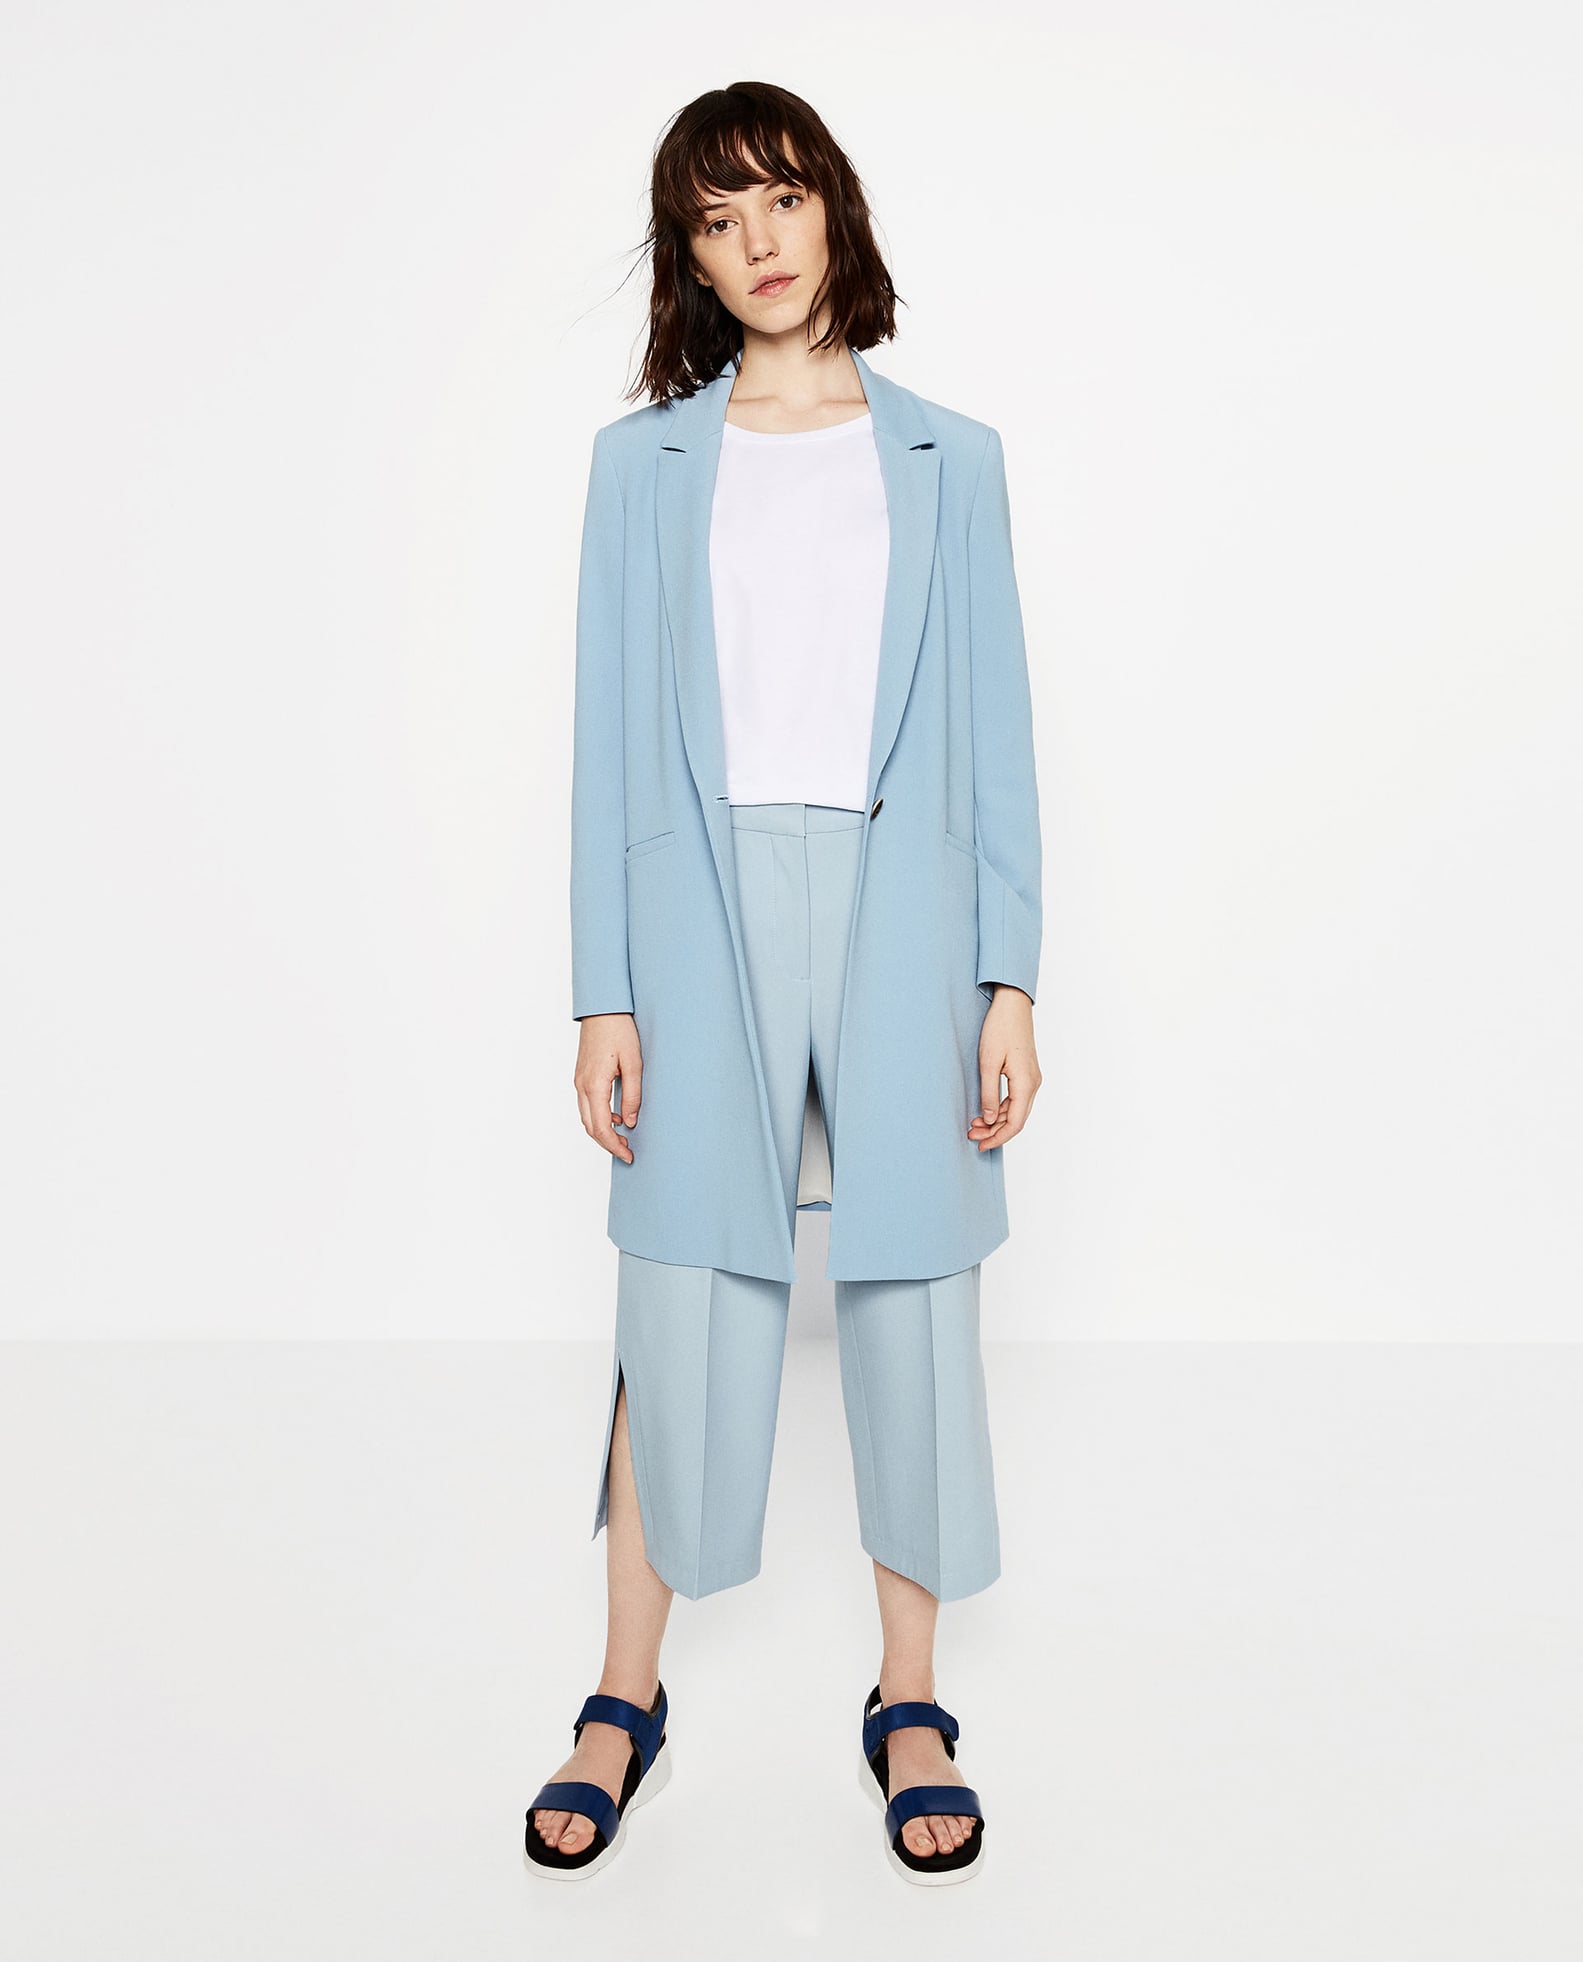 How to Dress Like Gigi Hadid at Zara | POPSUGAR Fashion